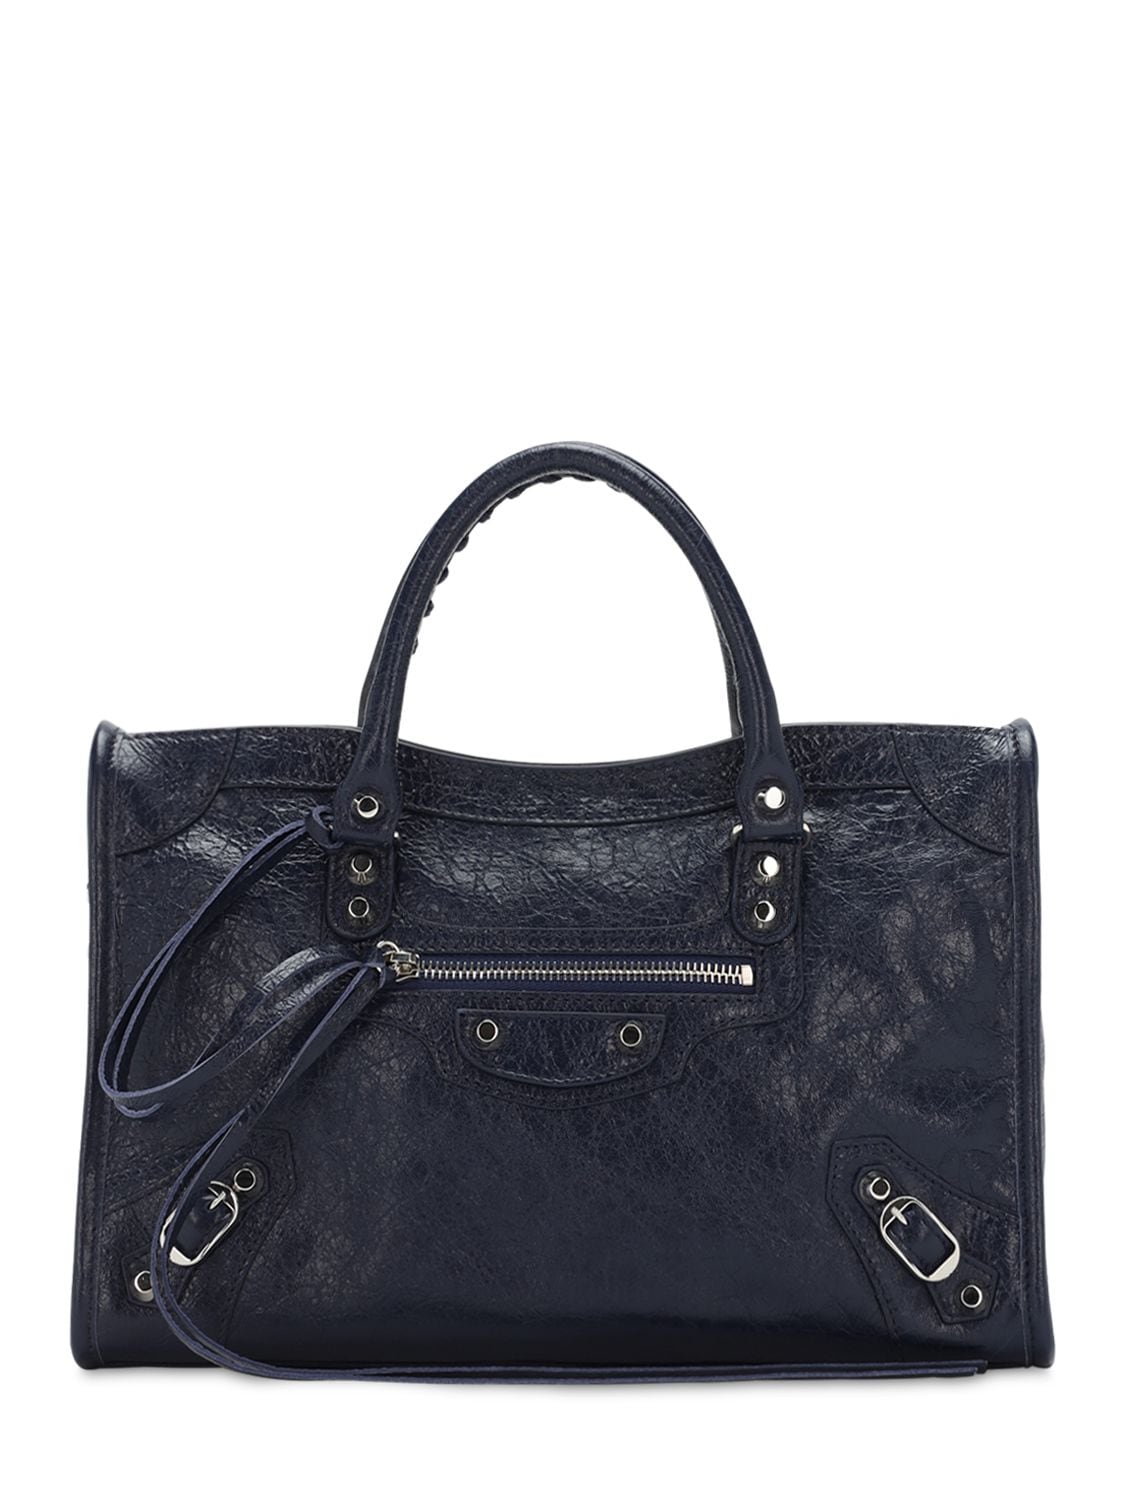 Balenciaga Sm Classic City Leather Top Handle Bag In Navy